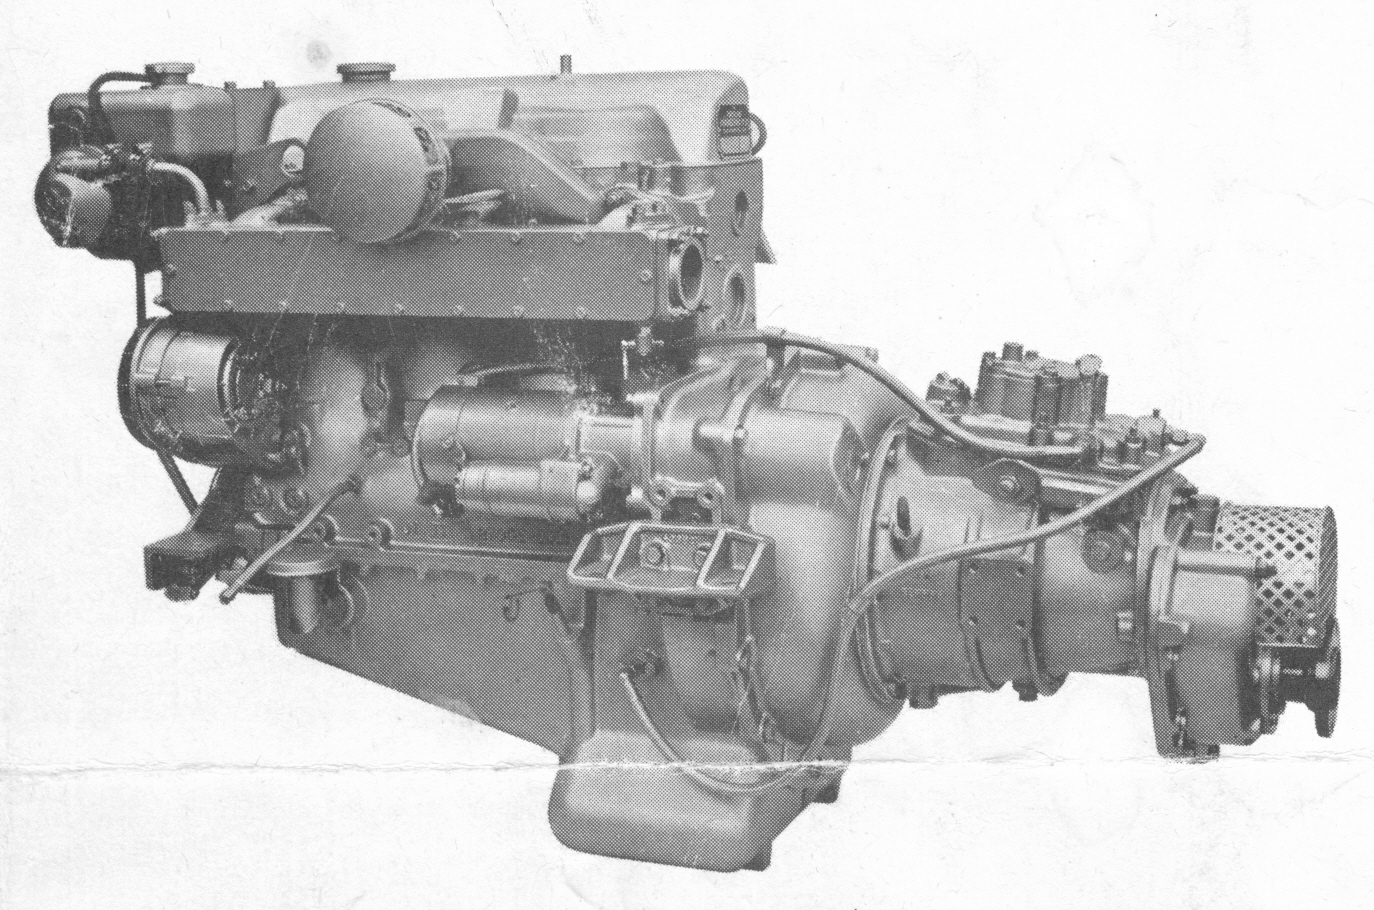 Parsons Pike II engine